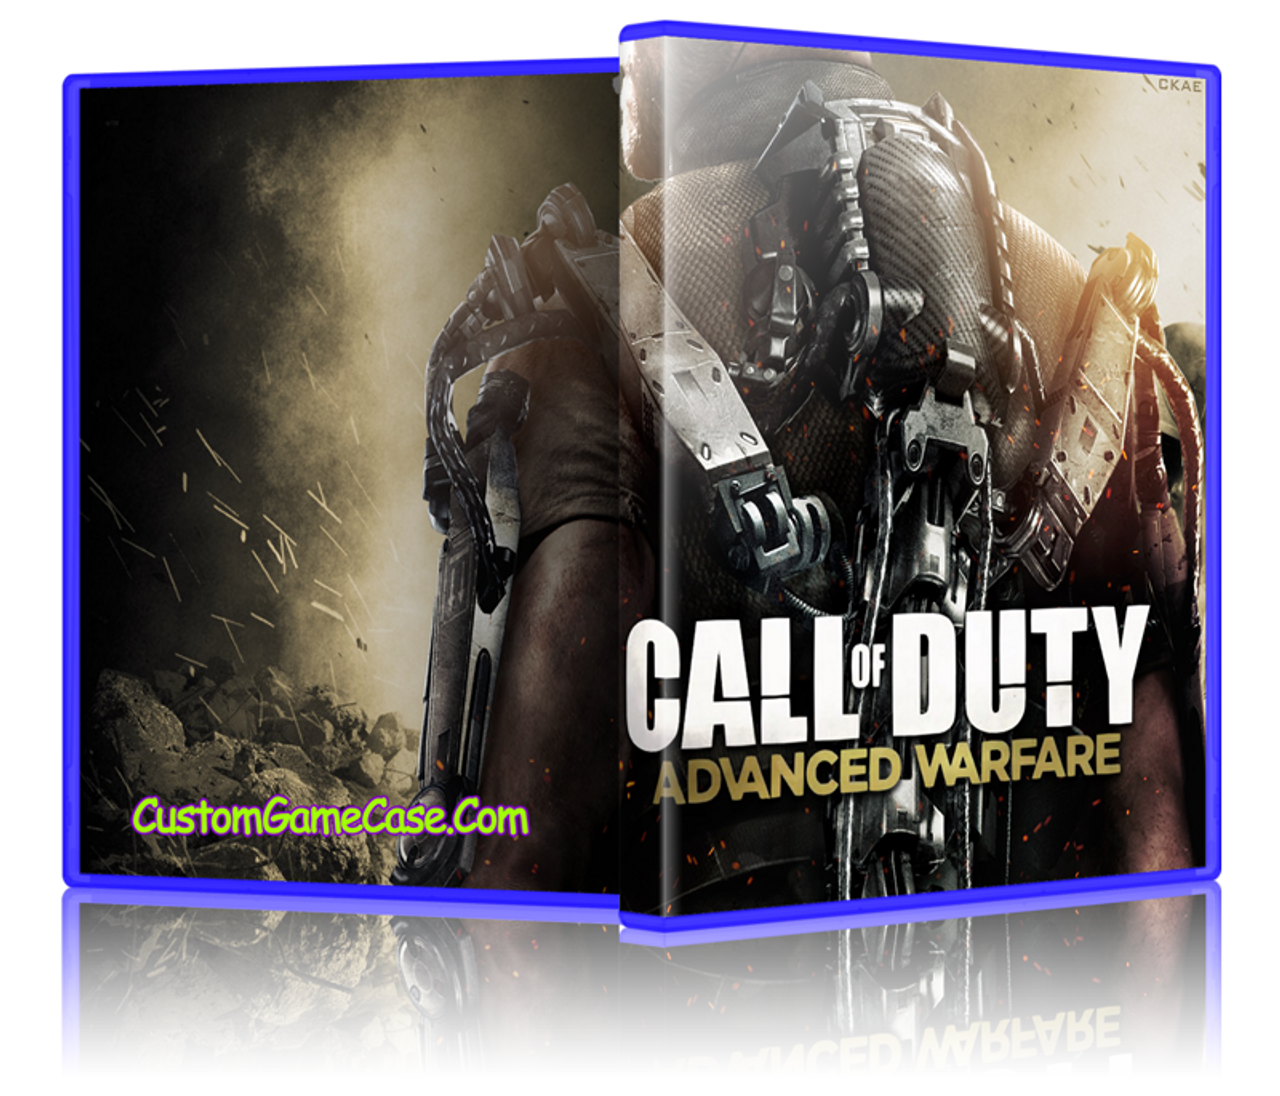 Call of Duty: Advanced Warfare (USED) - PlayStation 4